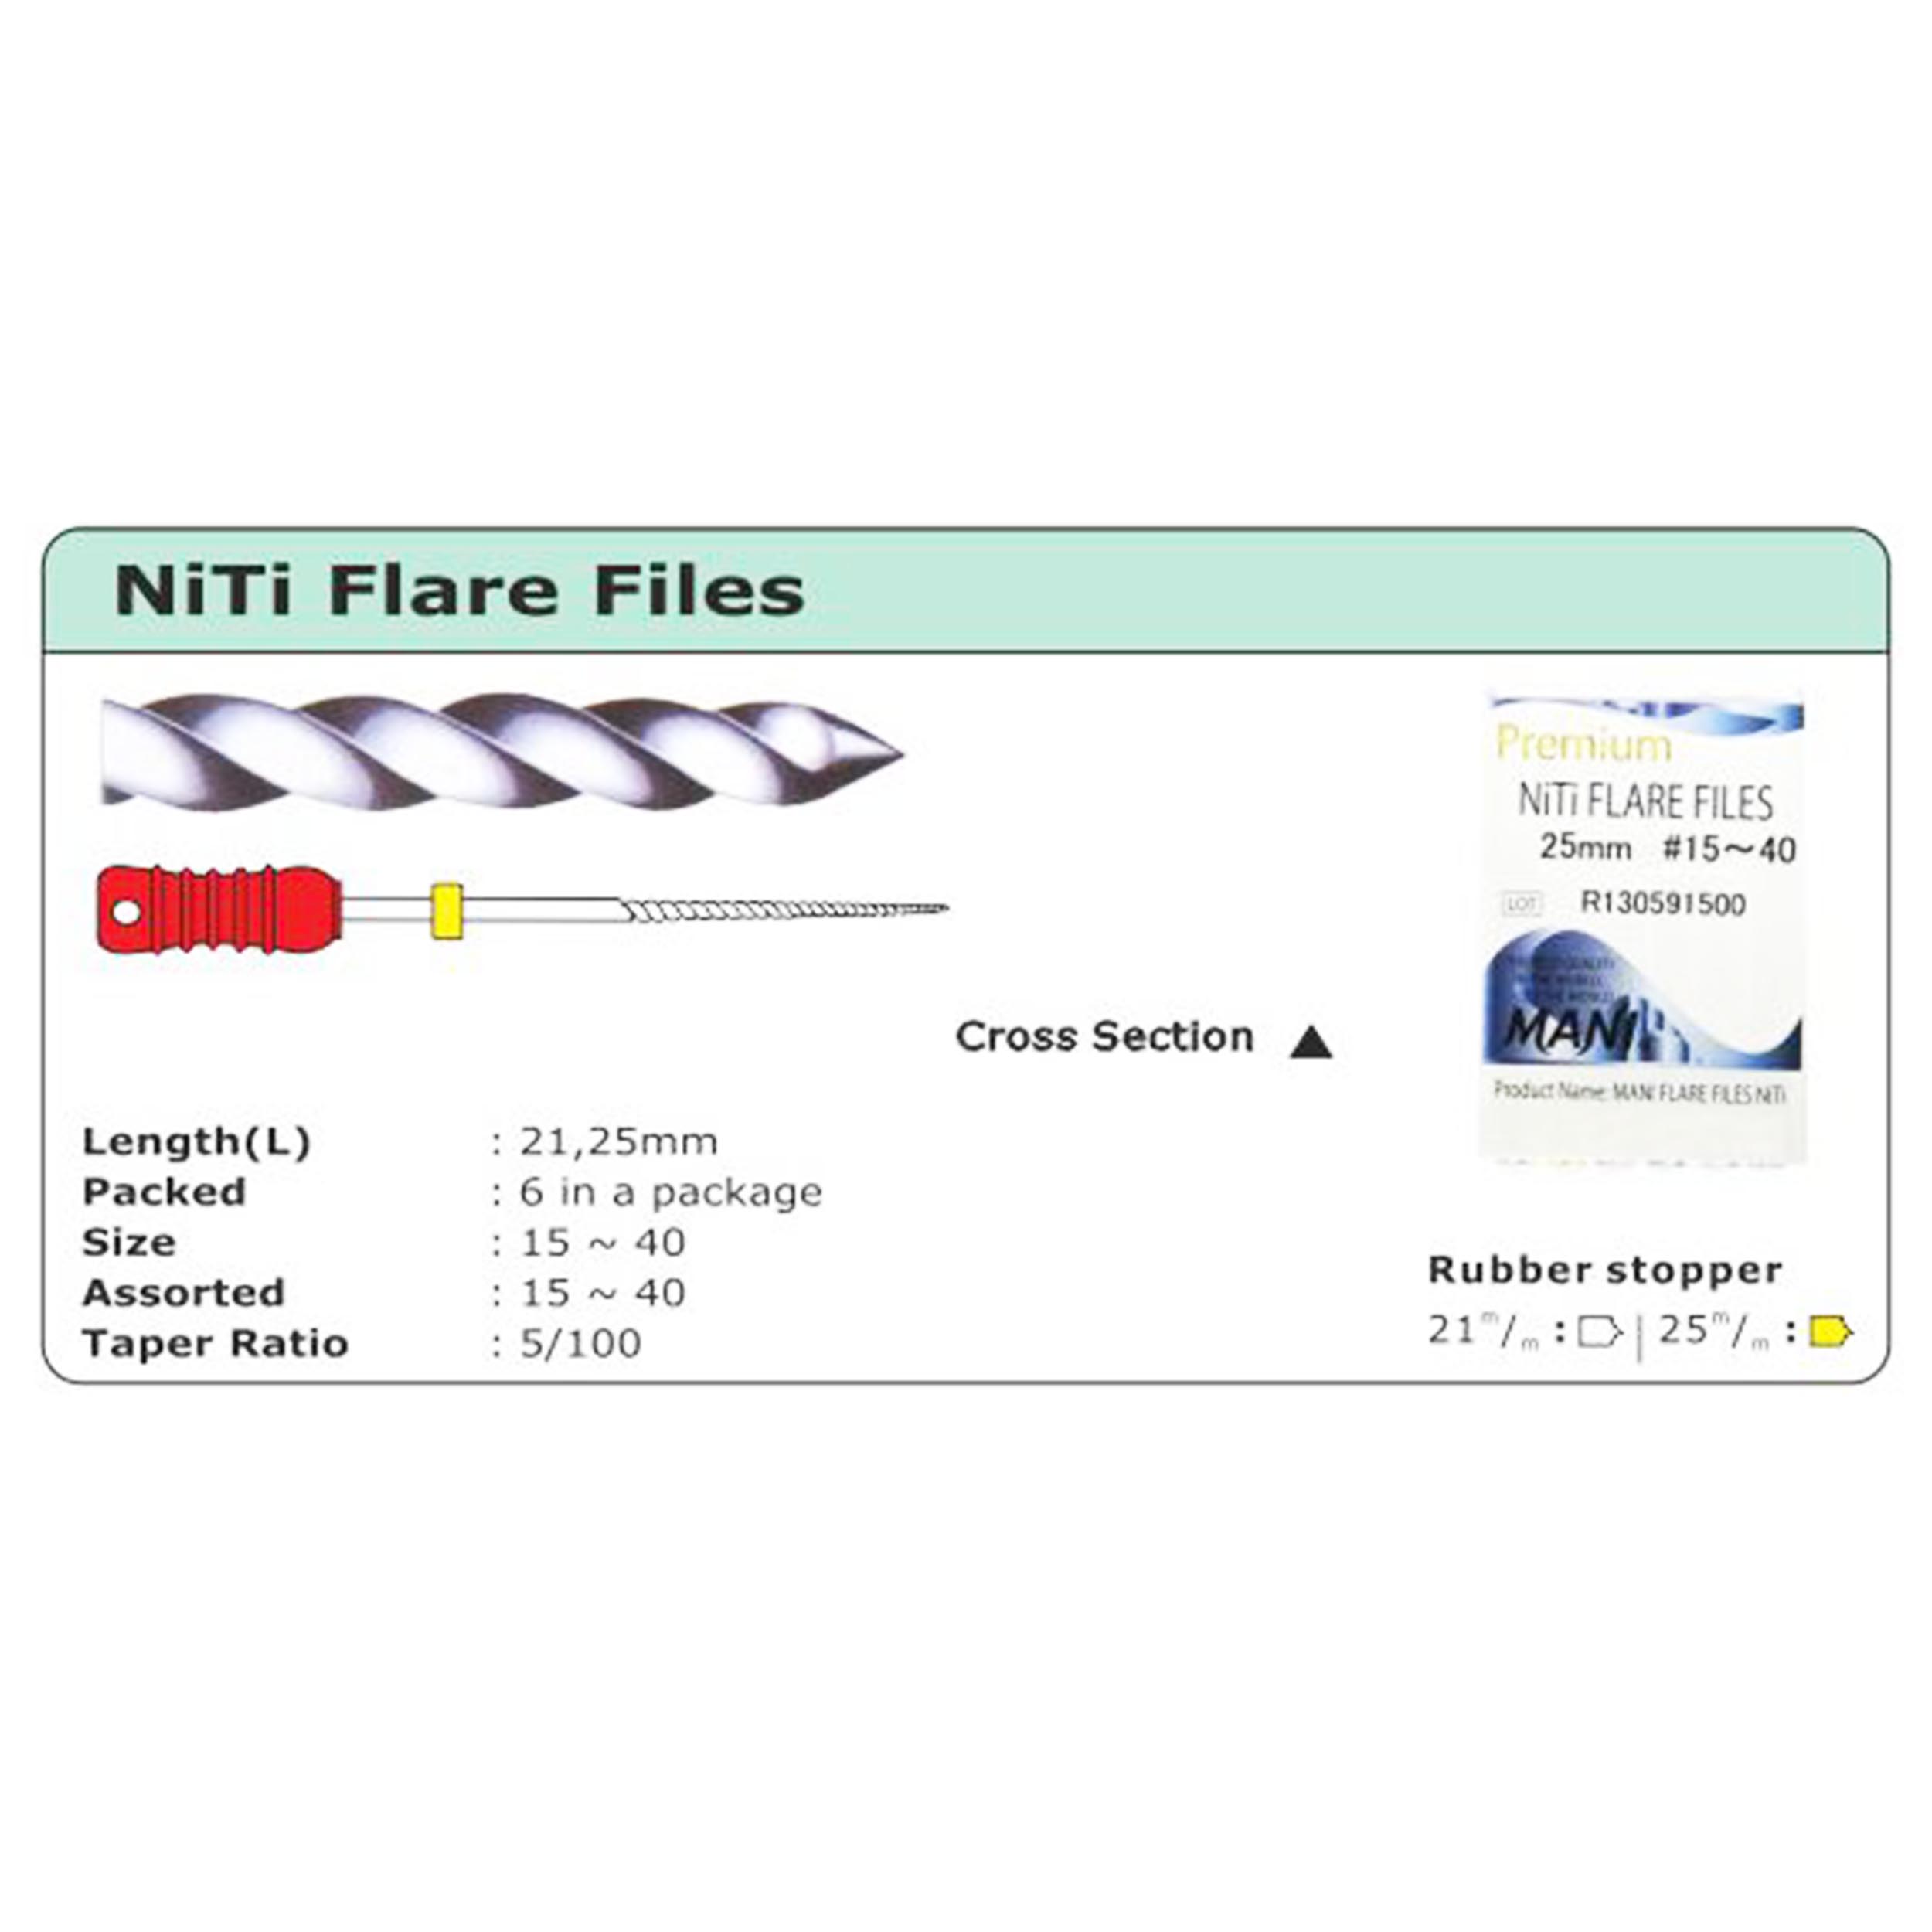 Mani Niti Flare Files 21mm 15-40